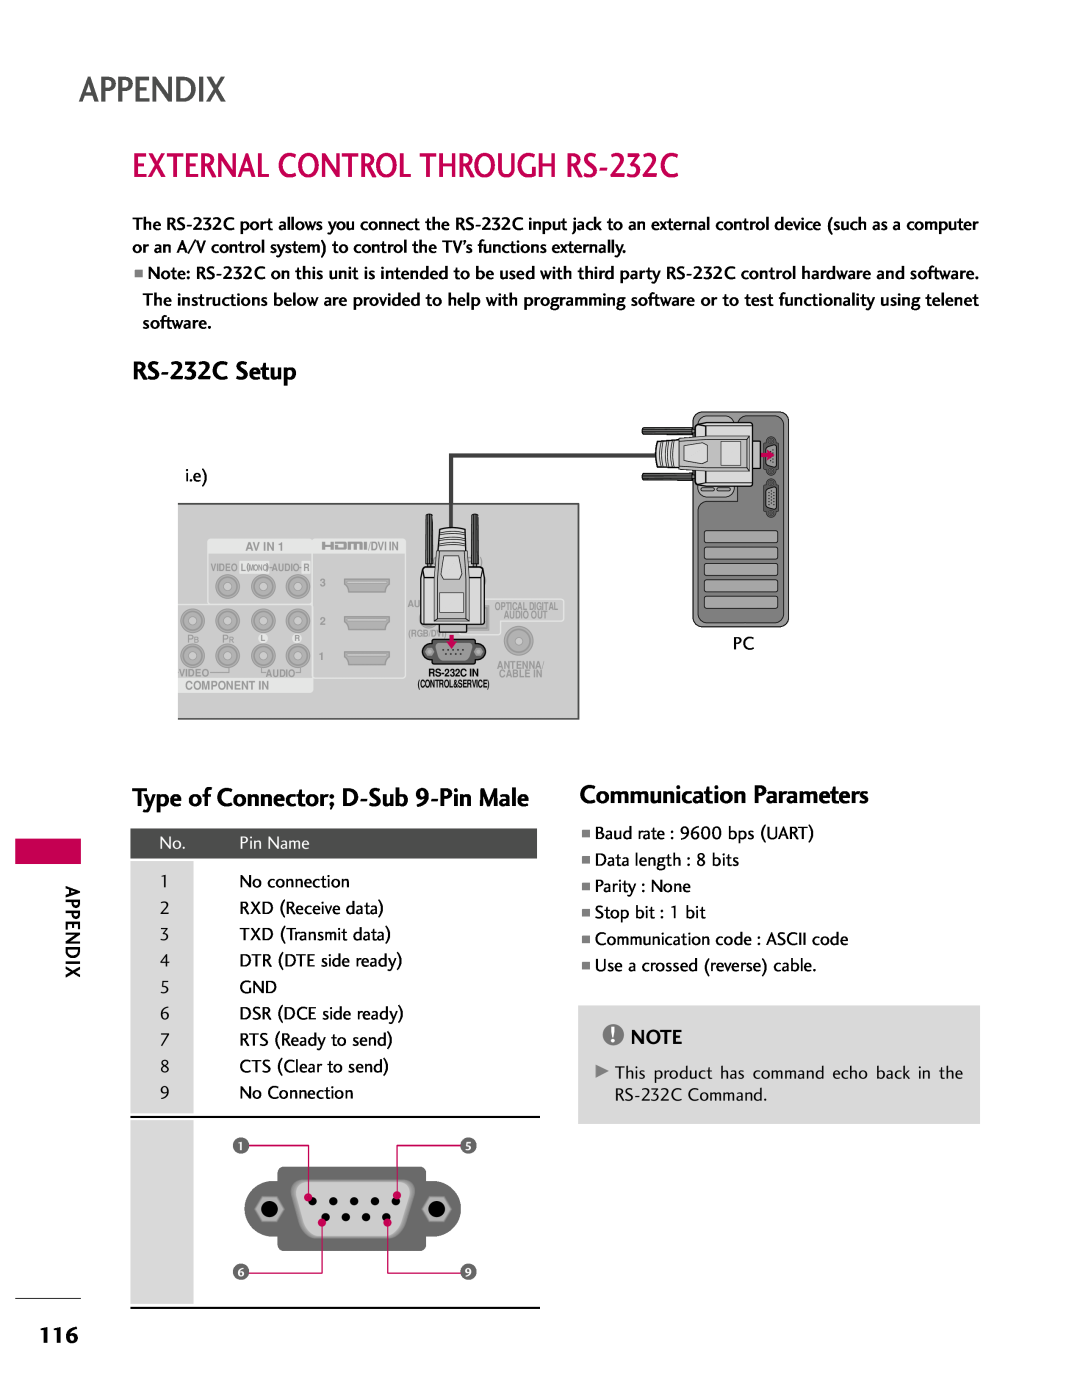 LG Electronics 37LH40 EXTERNAL CONTROL THROUGH RS-232C, RS-232C Setup, Communication Parameters, Pin Name, Appendix 